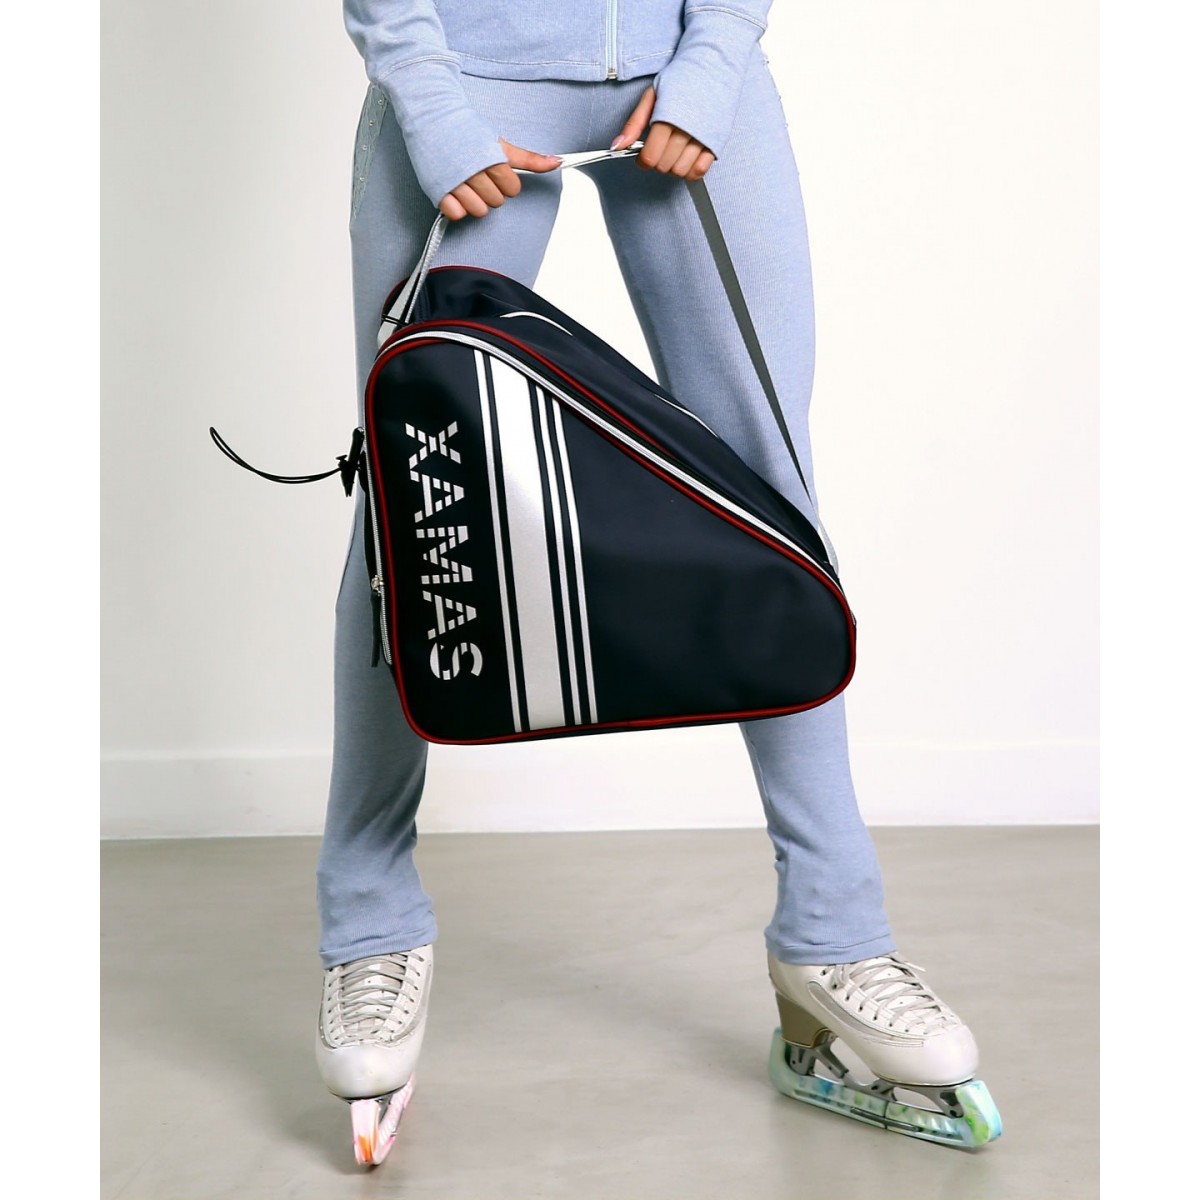 XAMAS signature shining deluxe ventilated skate bag